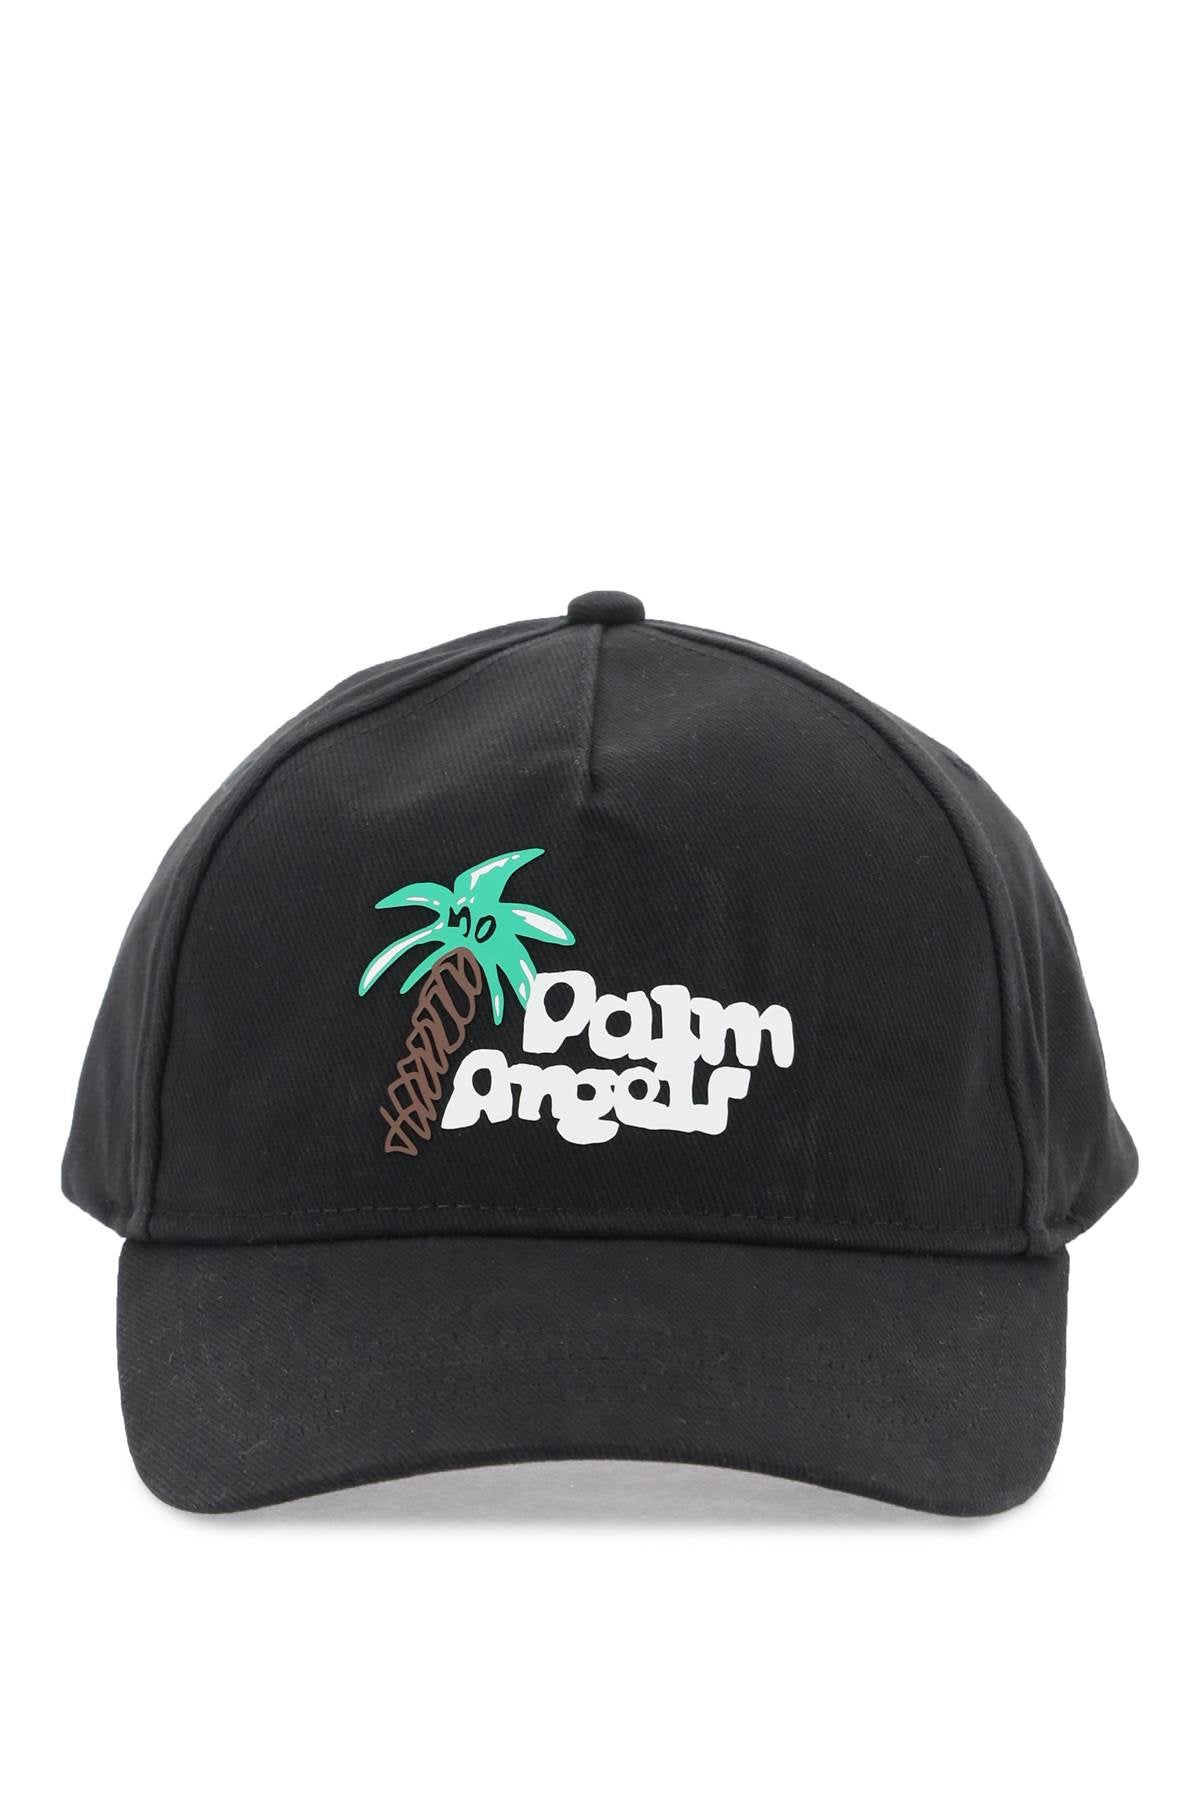 Palm Angels Palm angels sketchy baseball cap